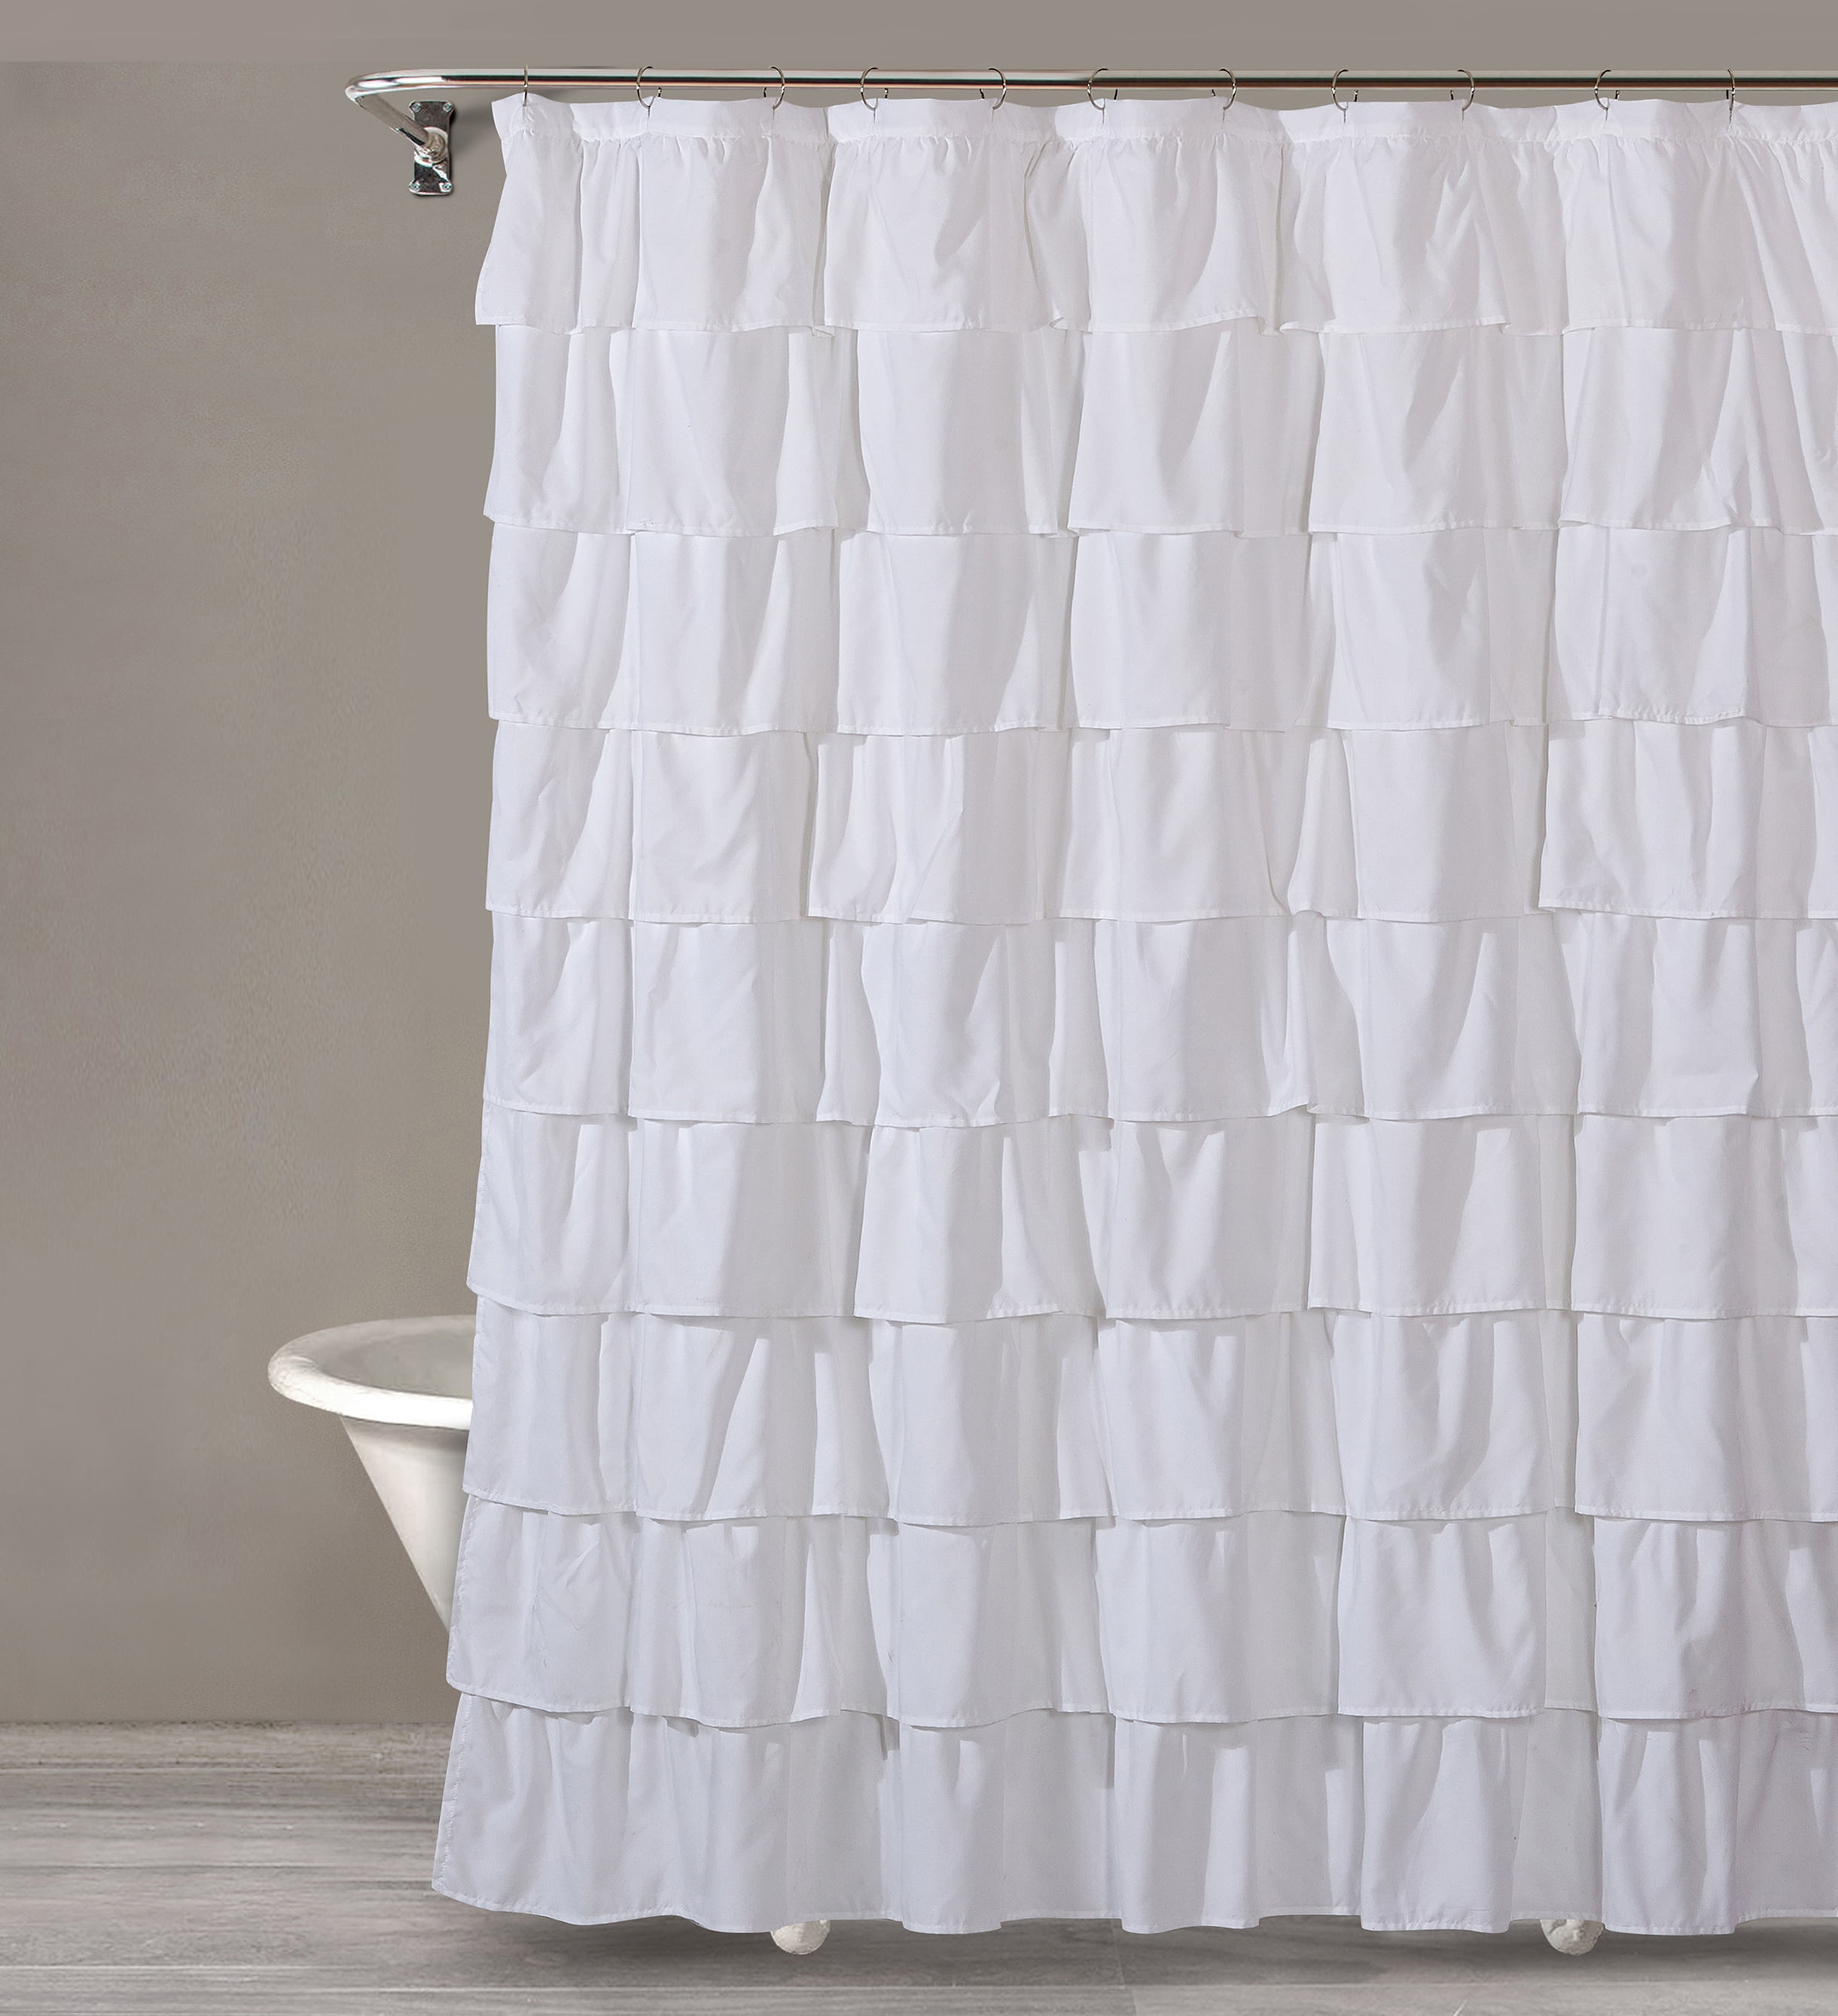 Style Quarters BIANCA RUFFLE Shower Curtain White Ruffles Polyester Machine Washable